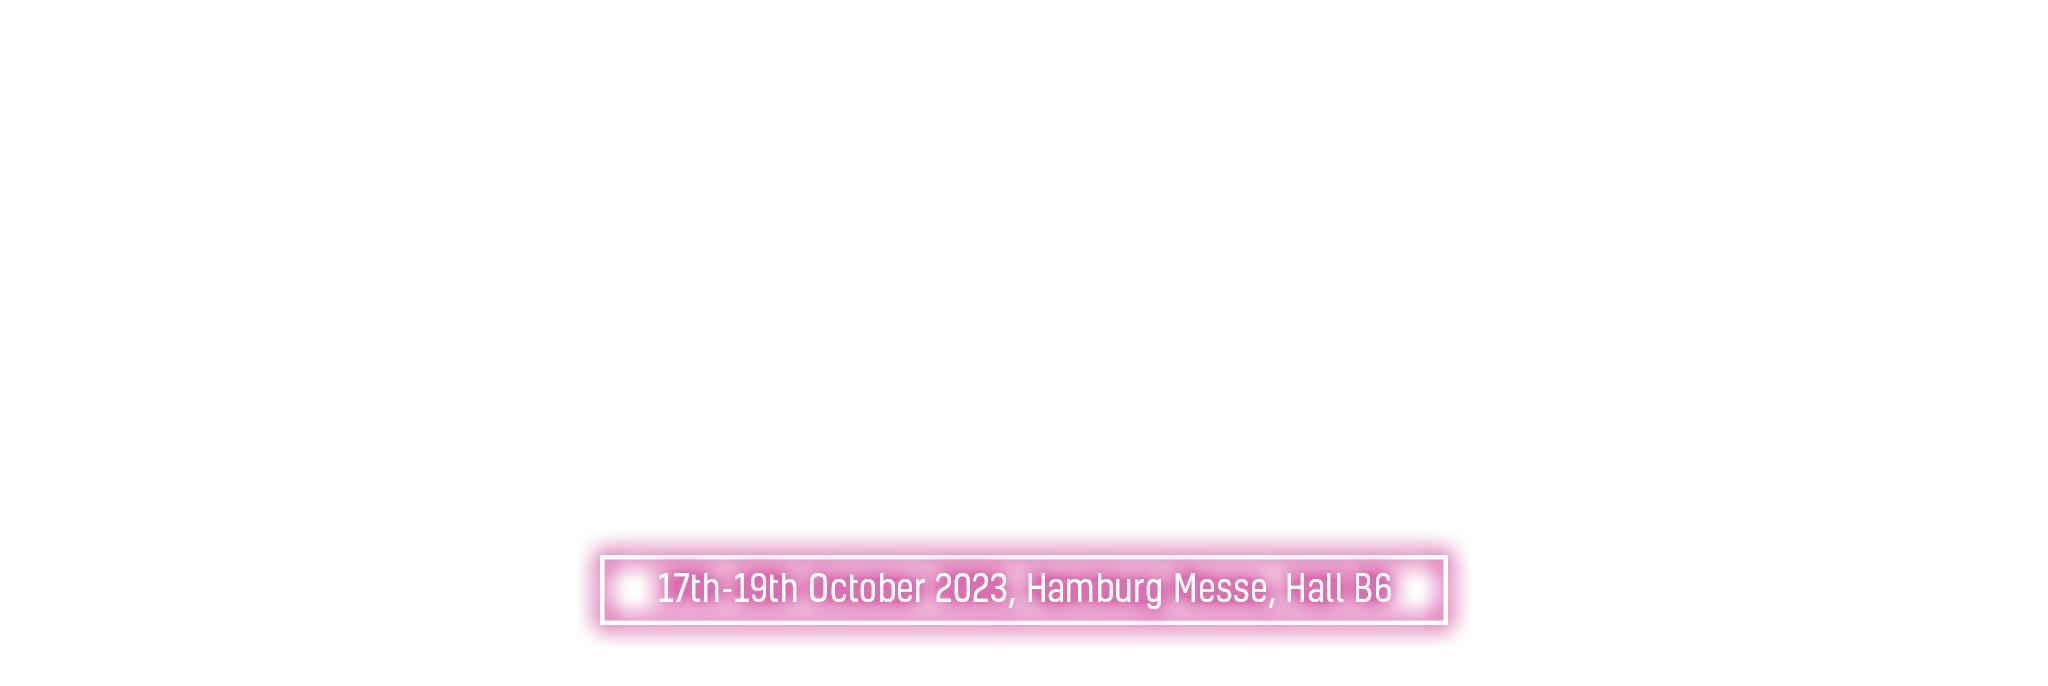 17th-19th October 2023, Hamburg Messe